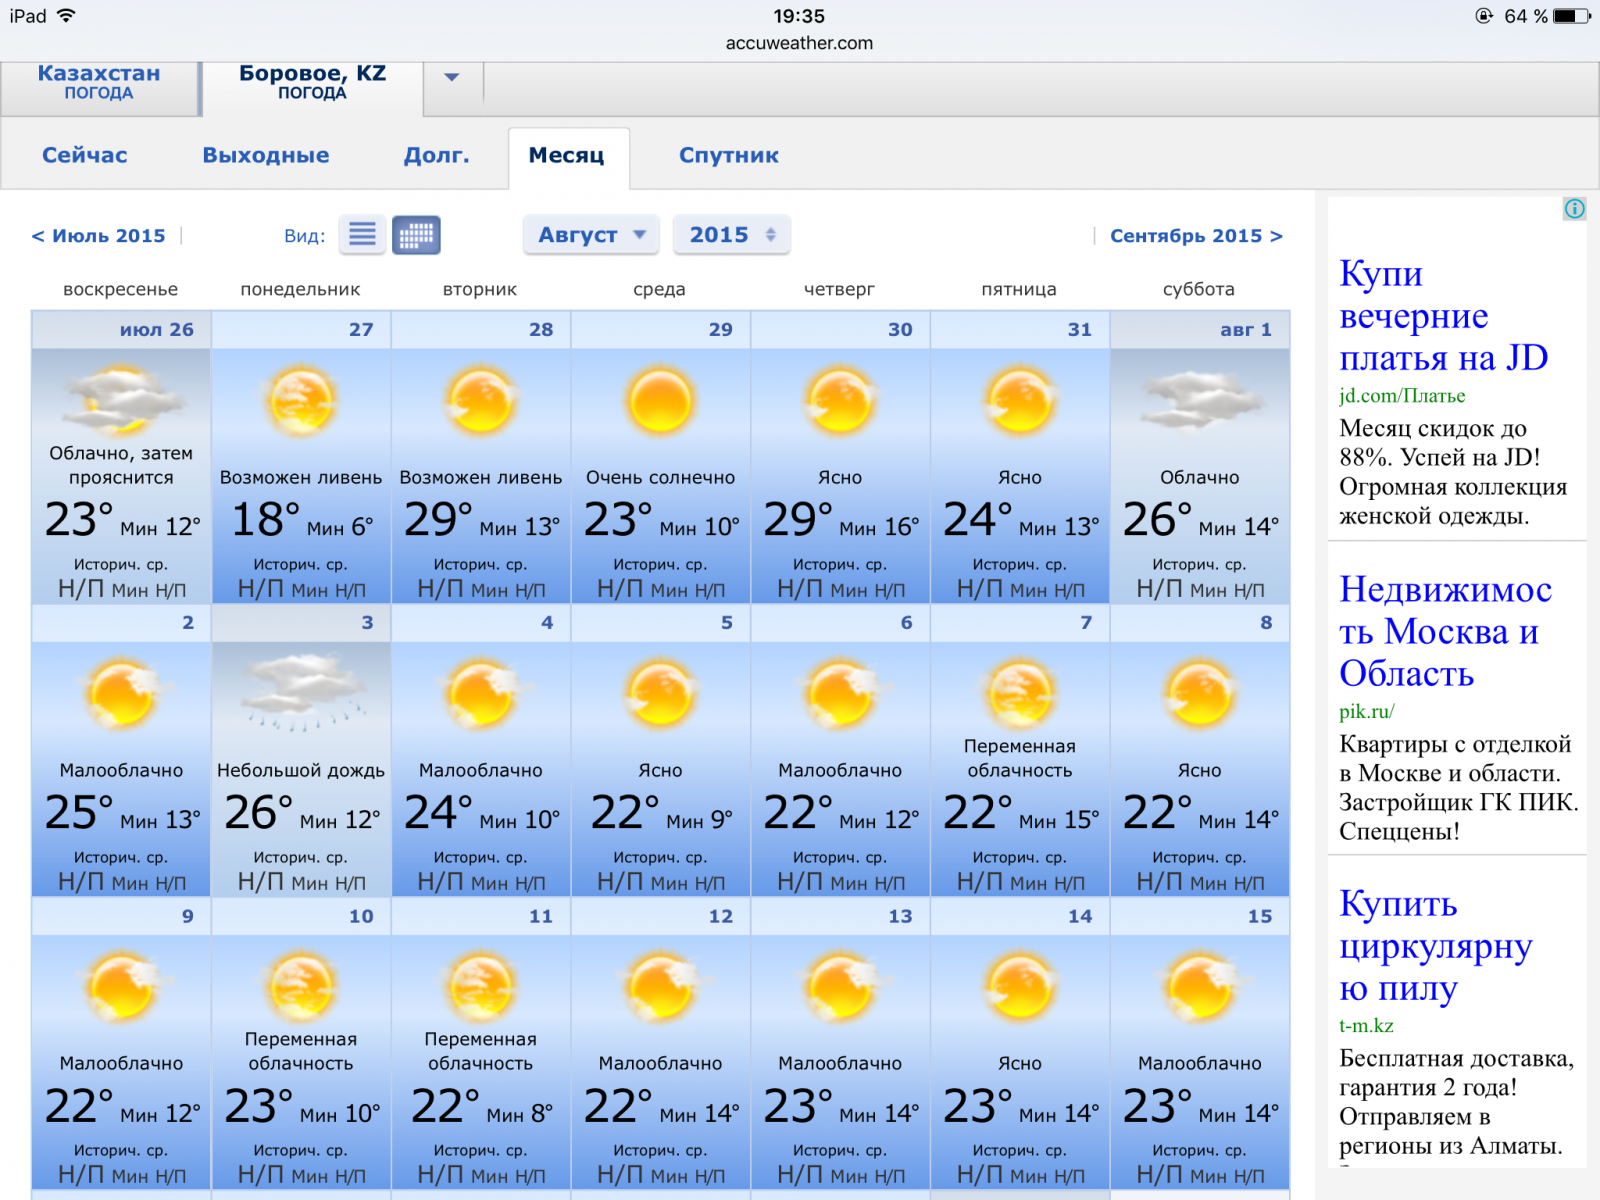 Прогноз погоды казахстана на 10 дней. Прогноз погоды. Казахстан погода. Погода в Казахстане сегодня. Прогноз погоды на неделю.